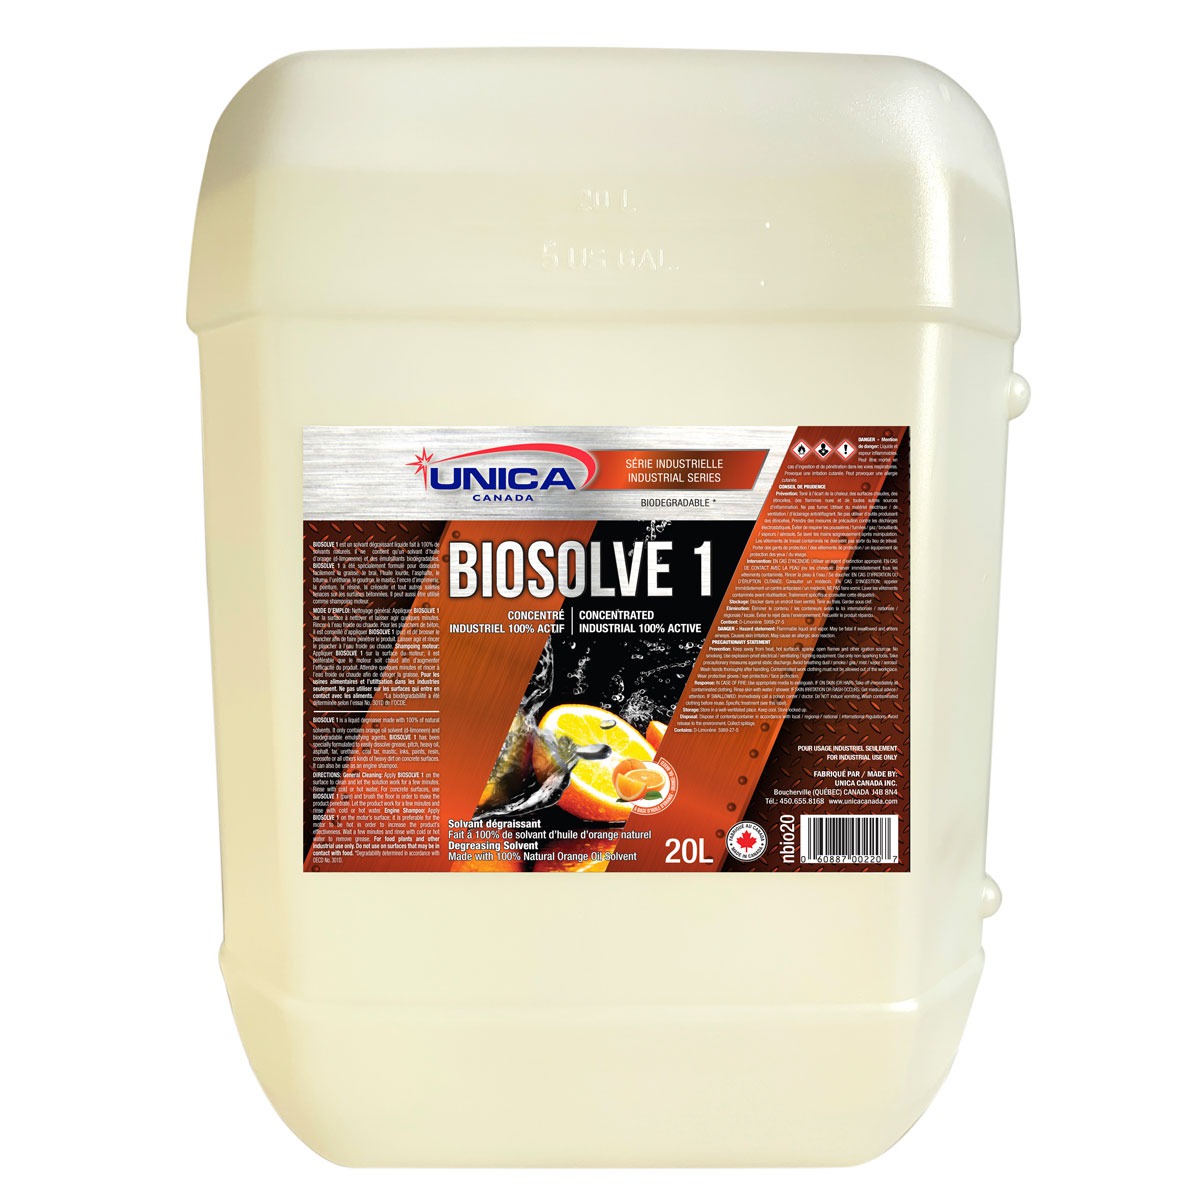 Biosolve 1